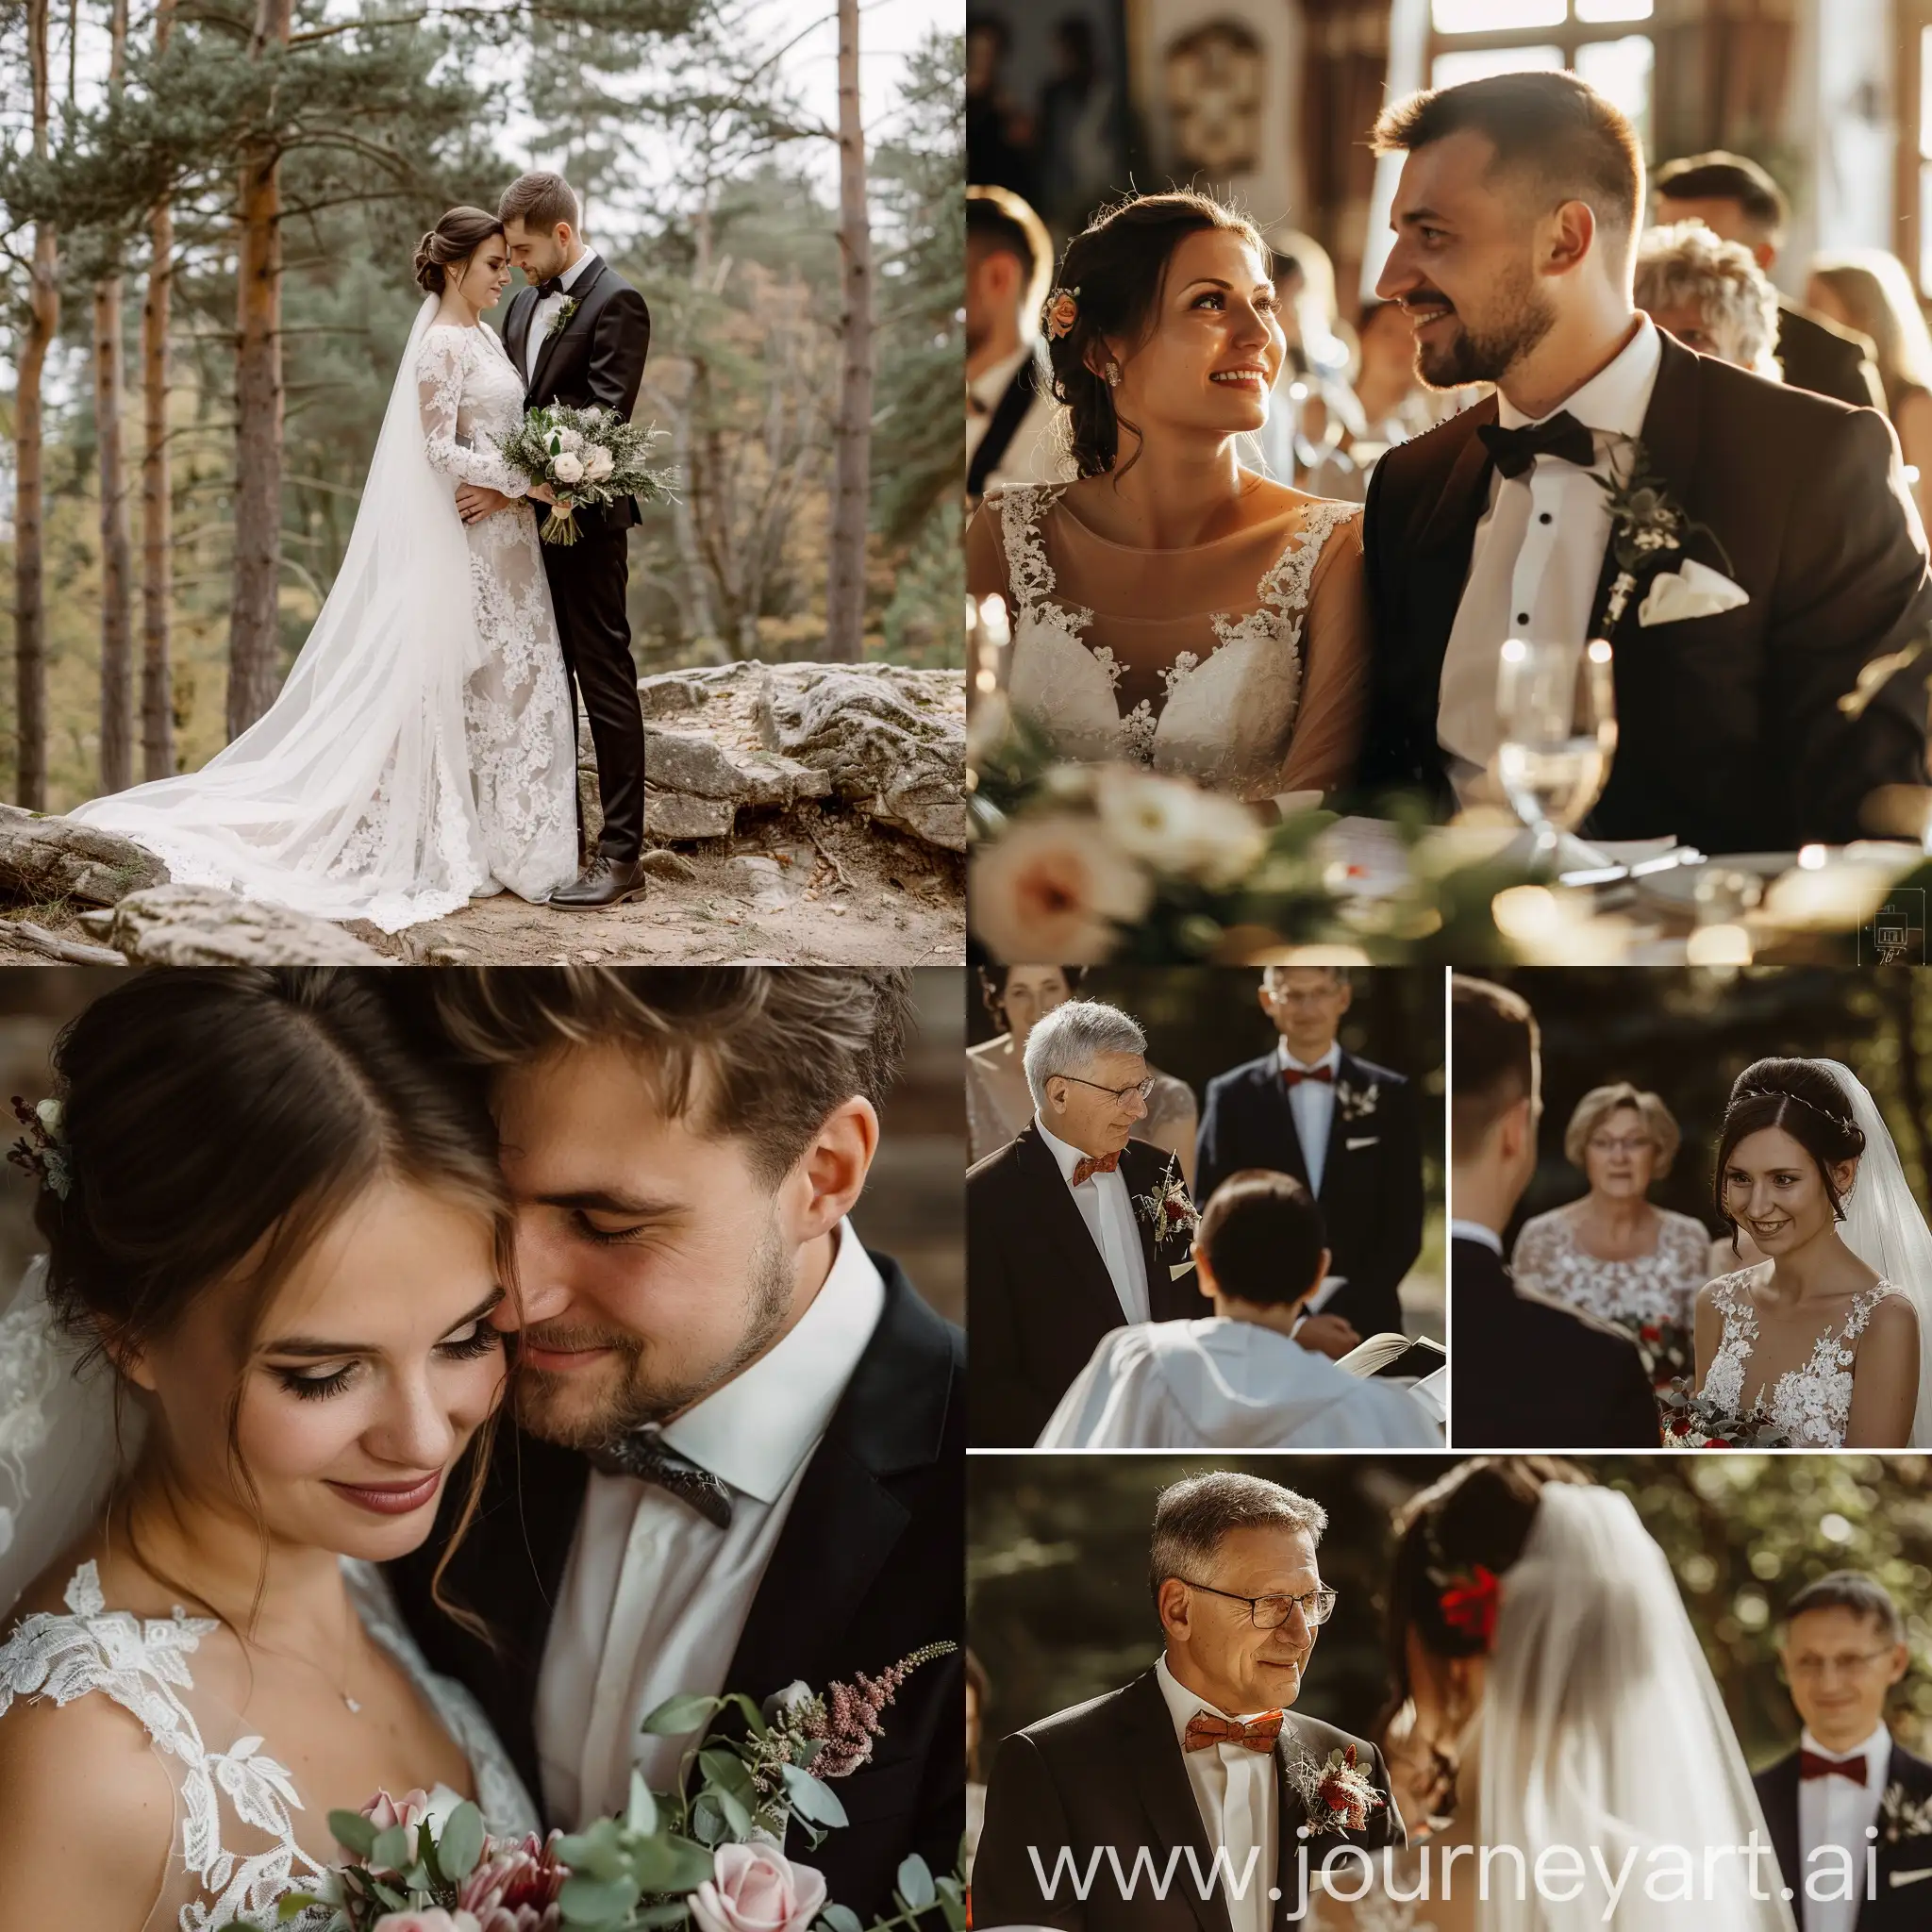 Traditional-Polish-Wedding-Celebration-with-Vibrant-Attire-and-Festive-Atmosphere